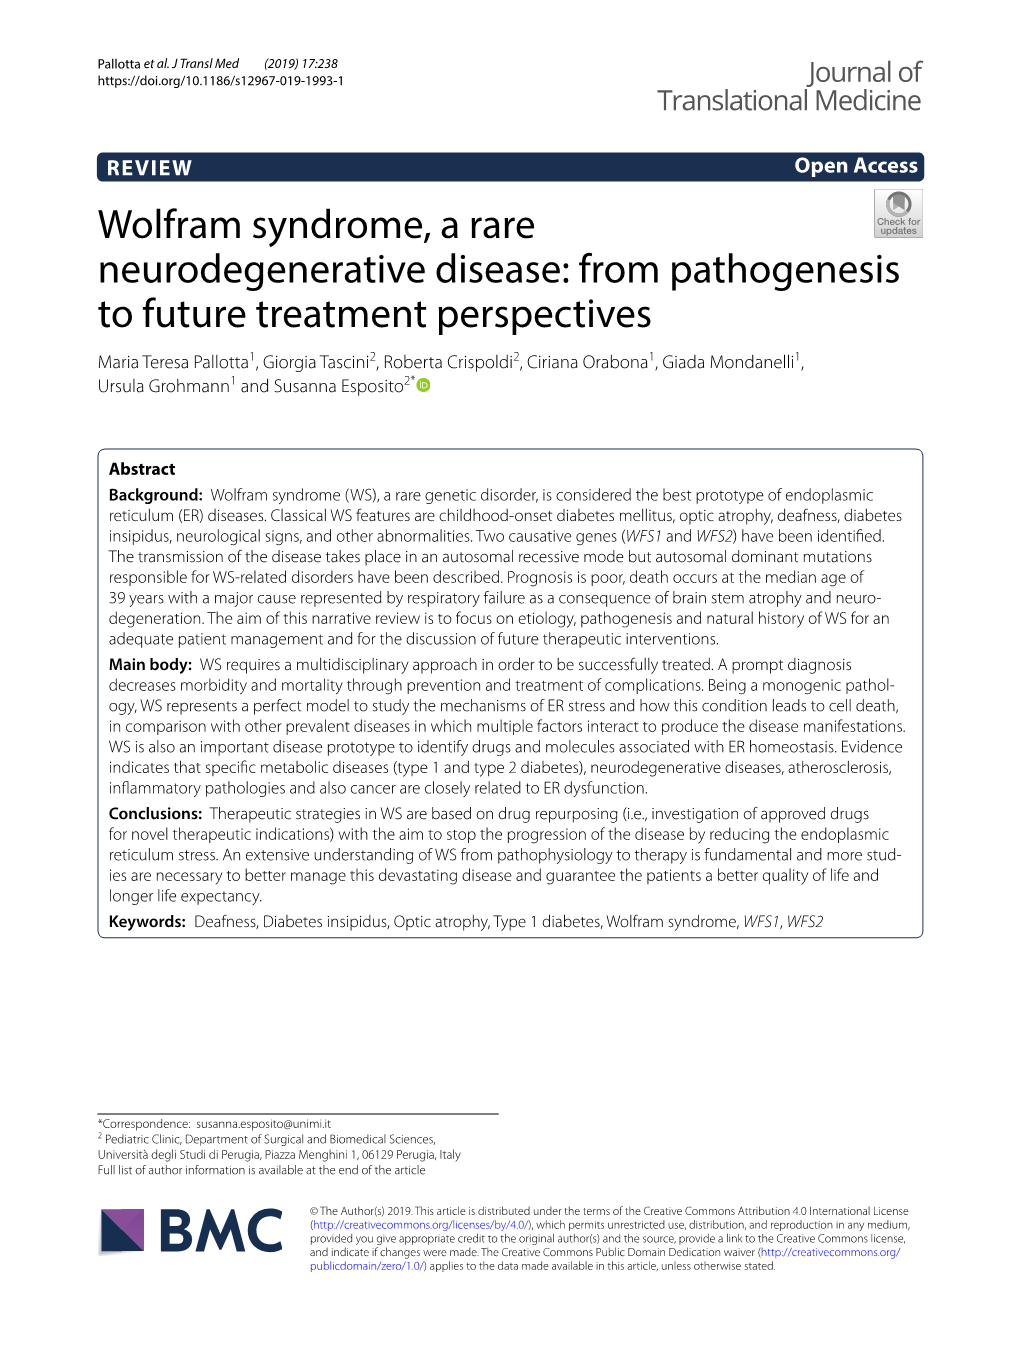 Wolfram Syndrome, a Rare Neurodegenerative Disease